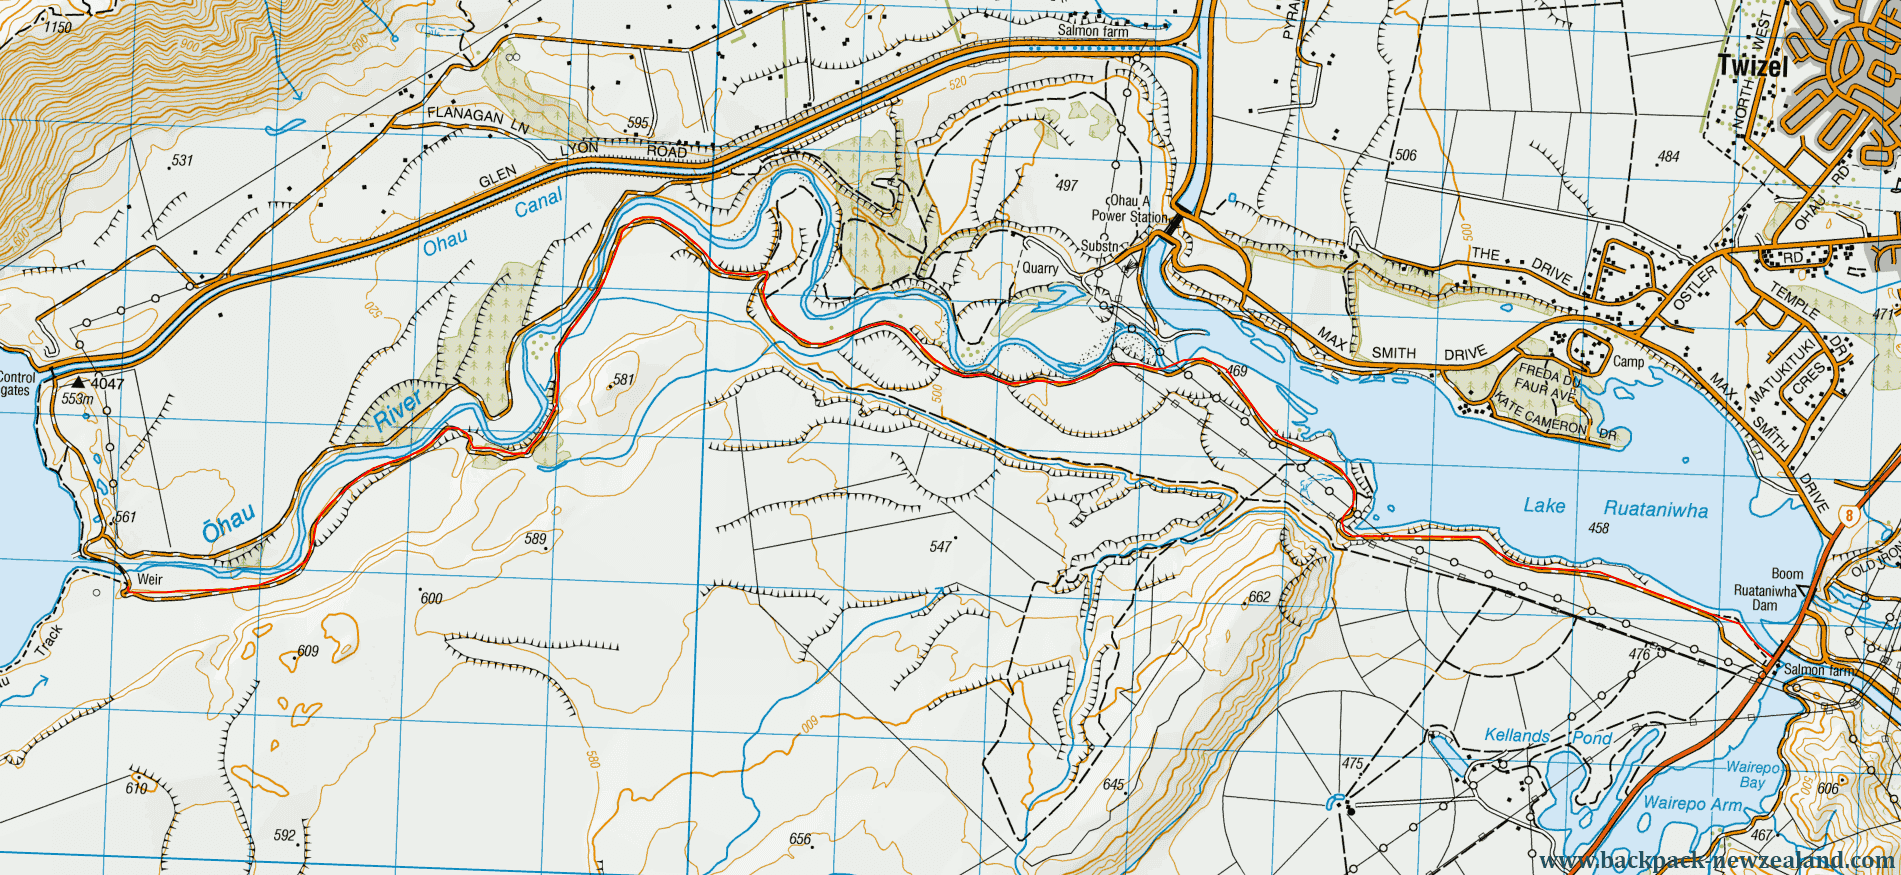 Ohau River Road Map - New Zealand Tracks